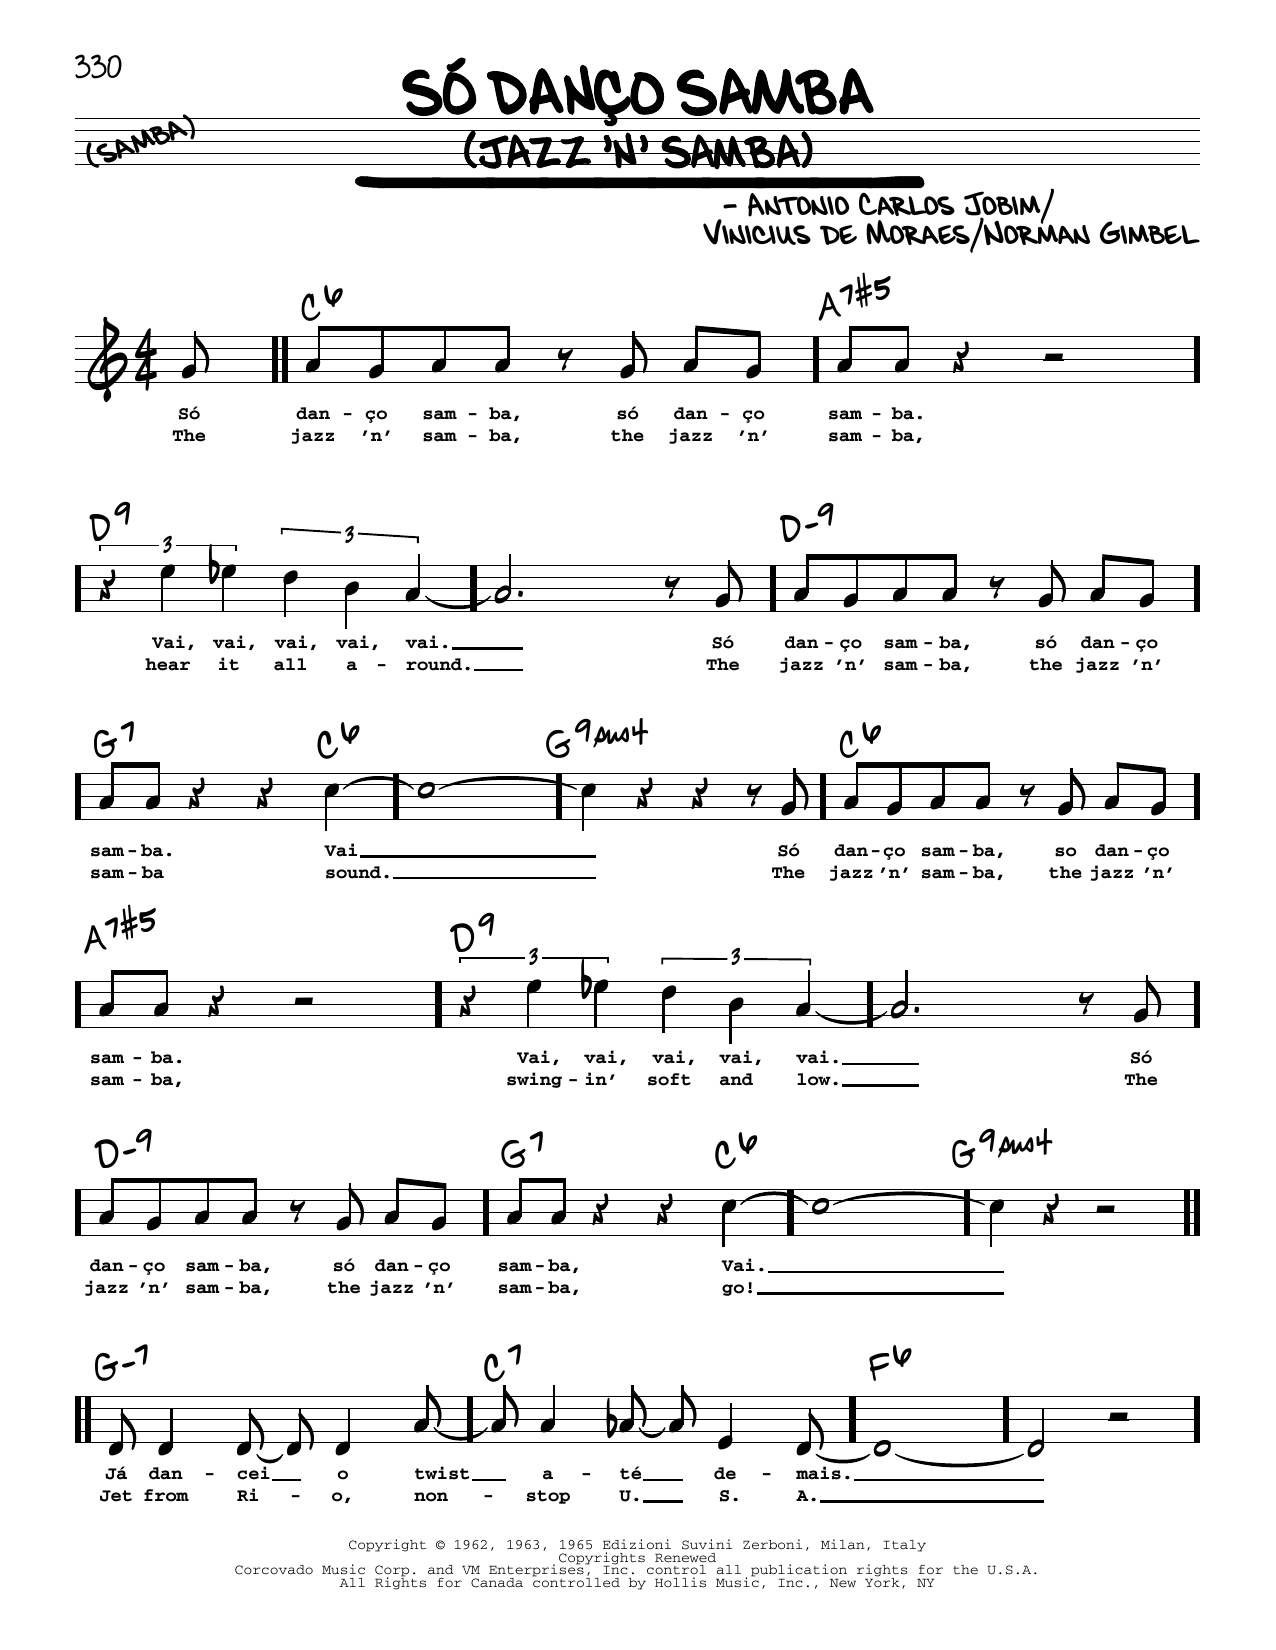 Download Antonio Carlos Jobim Jazz 'N' Samba (So Danco Samba) (High Voice) (from Copacabana Palace) Sheet Music and learn how to play Real Book – Melody, Lyrics & Chords PDF digital score in minutes